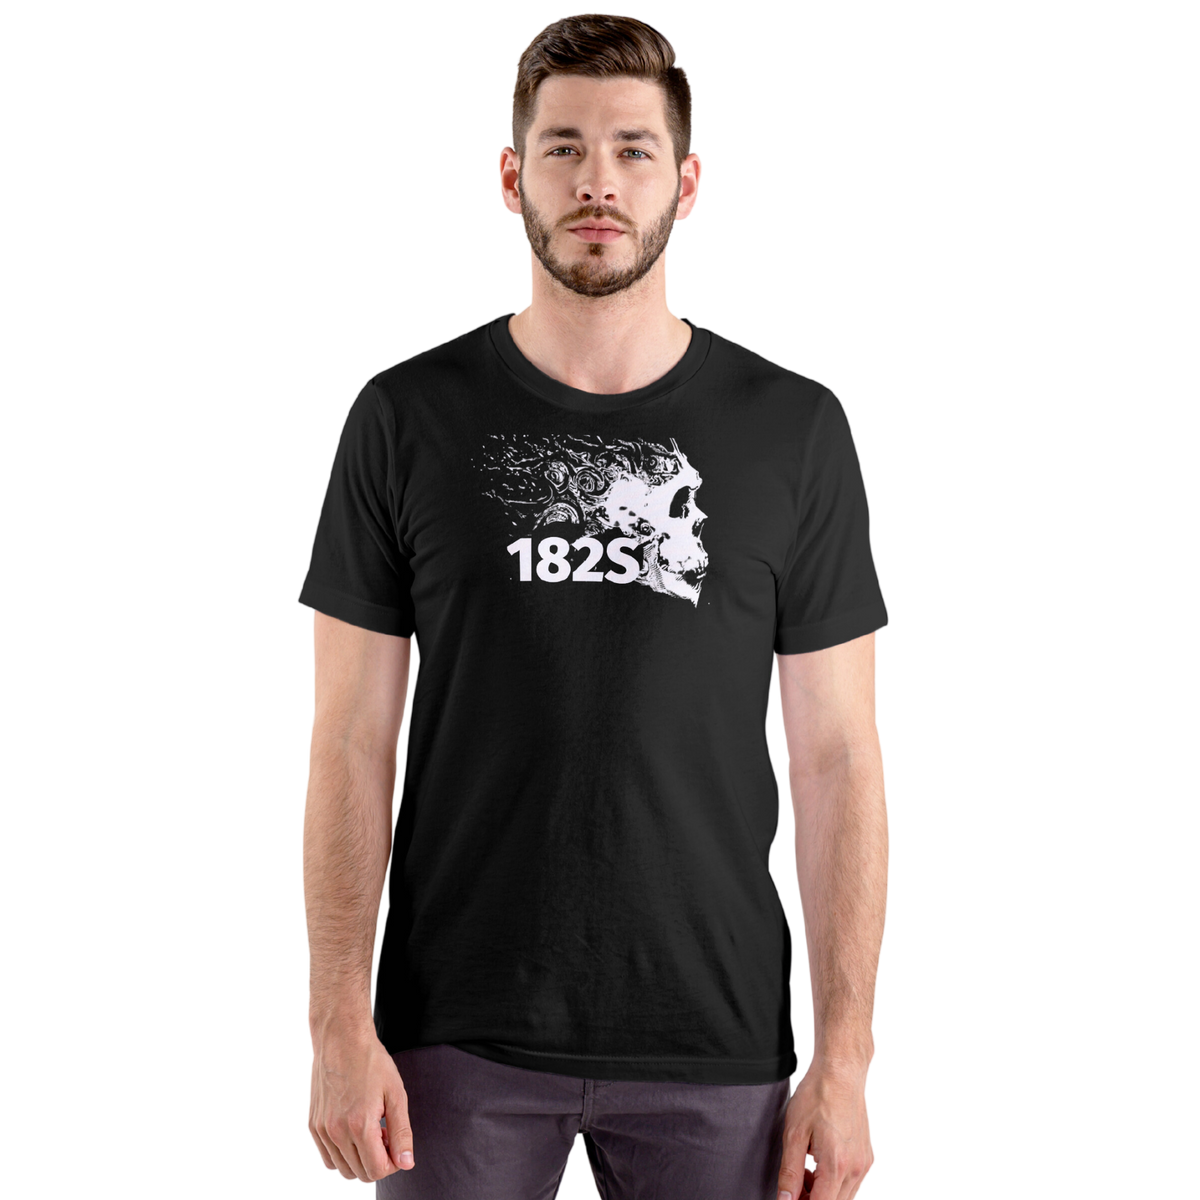 Nome do produto: Camiseta Oficial Space182, 182S, Caveira